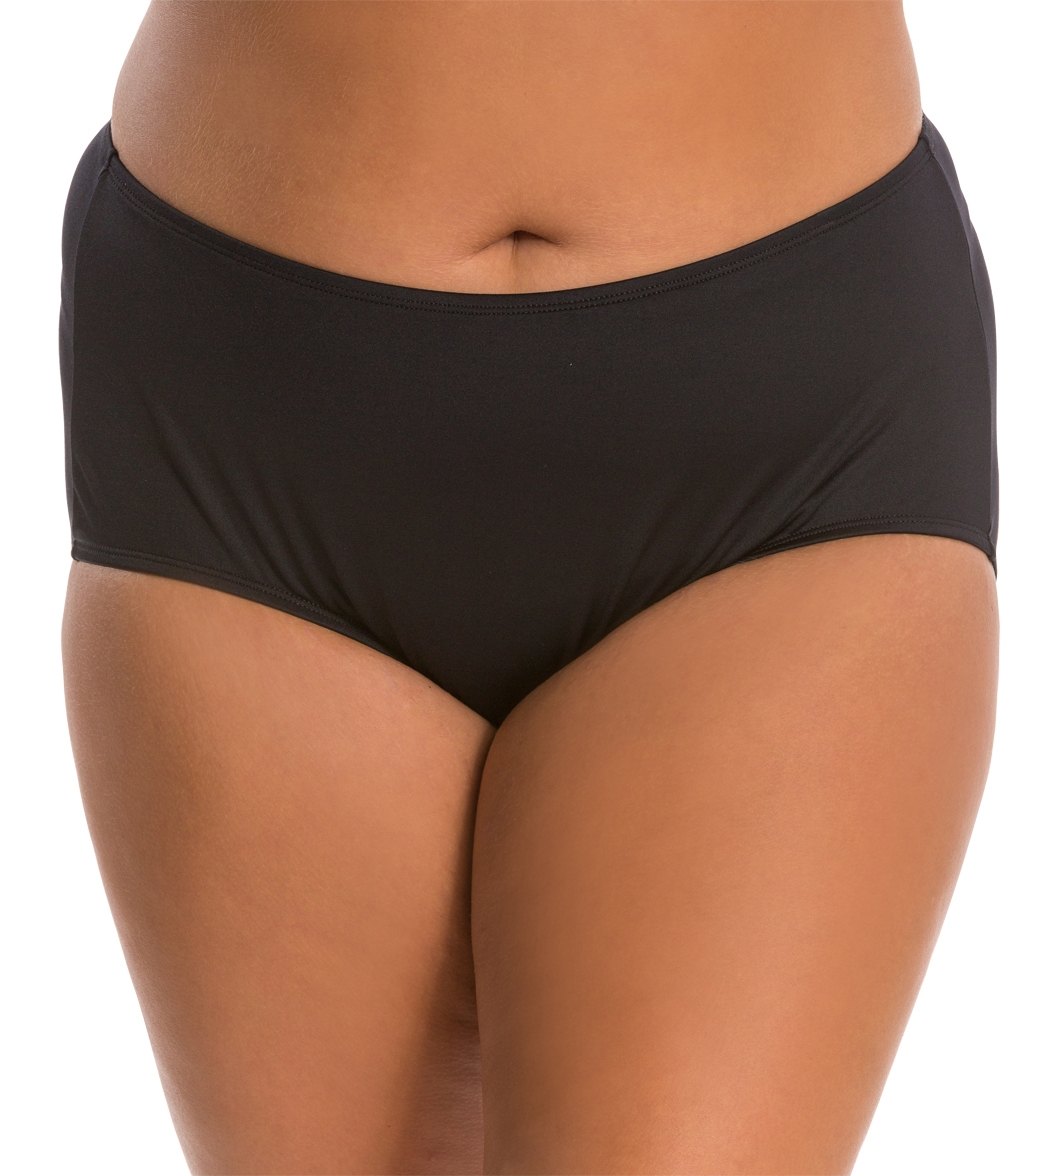 Coco Reef Plus Master Classic High Waist Bikini Bottom - Castaway Black 1X - Swimoutlet.com